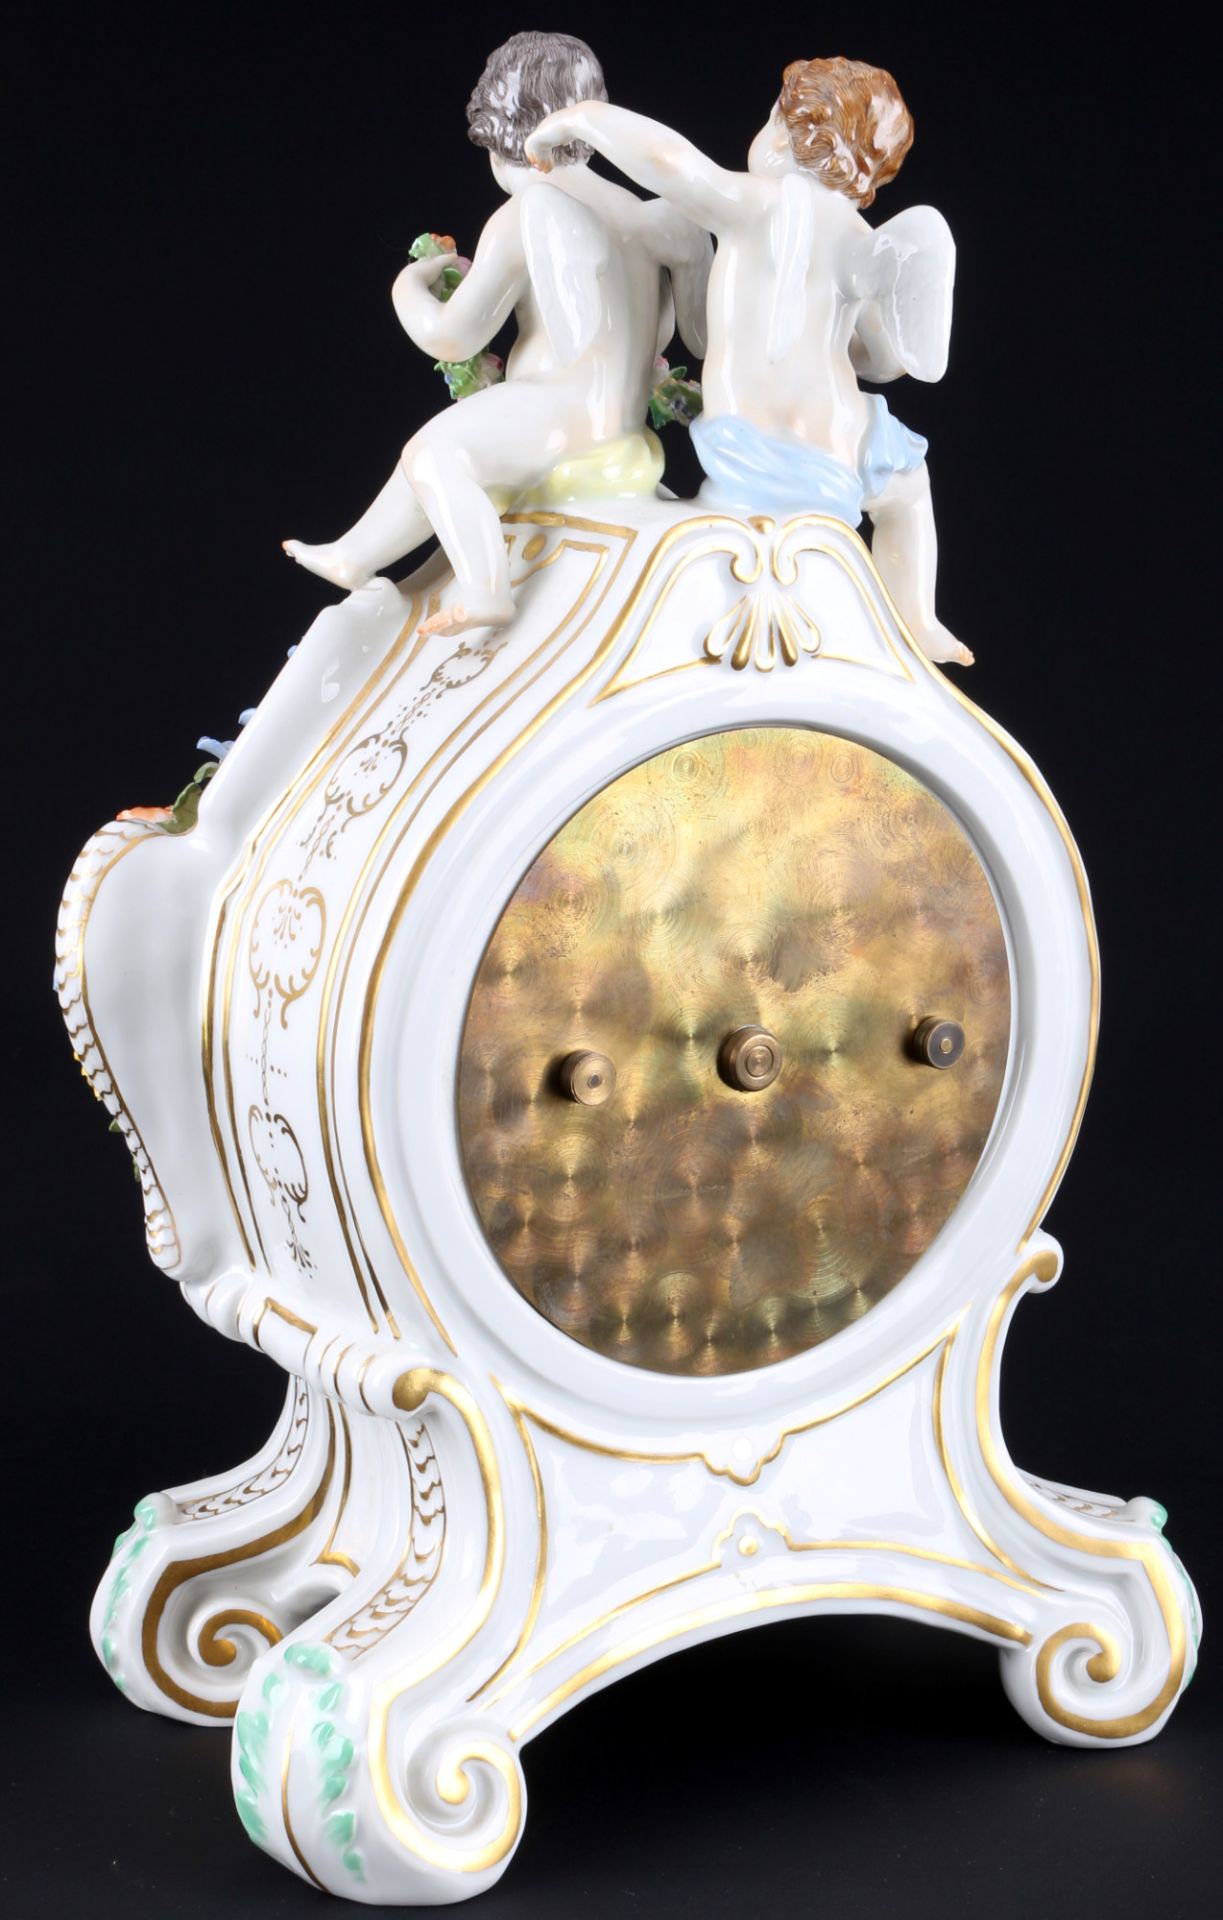 Meissen mantel clock with cherubs and flowers 1st choice - Ernst August LEUTERITZ, - Image 5 of 6